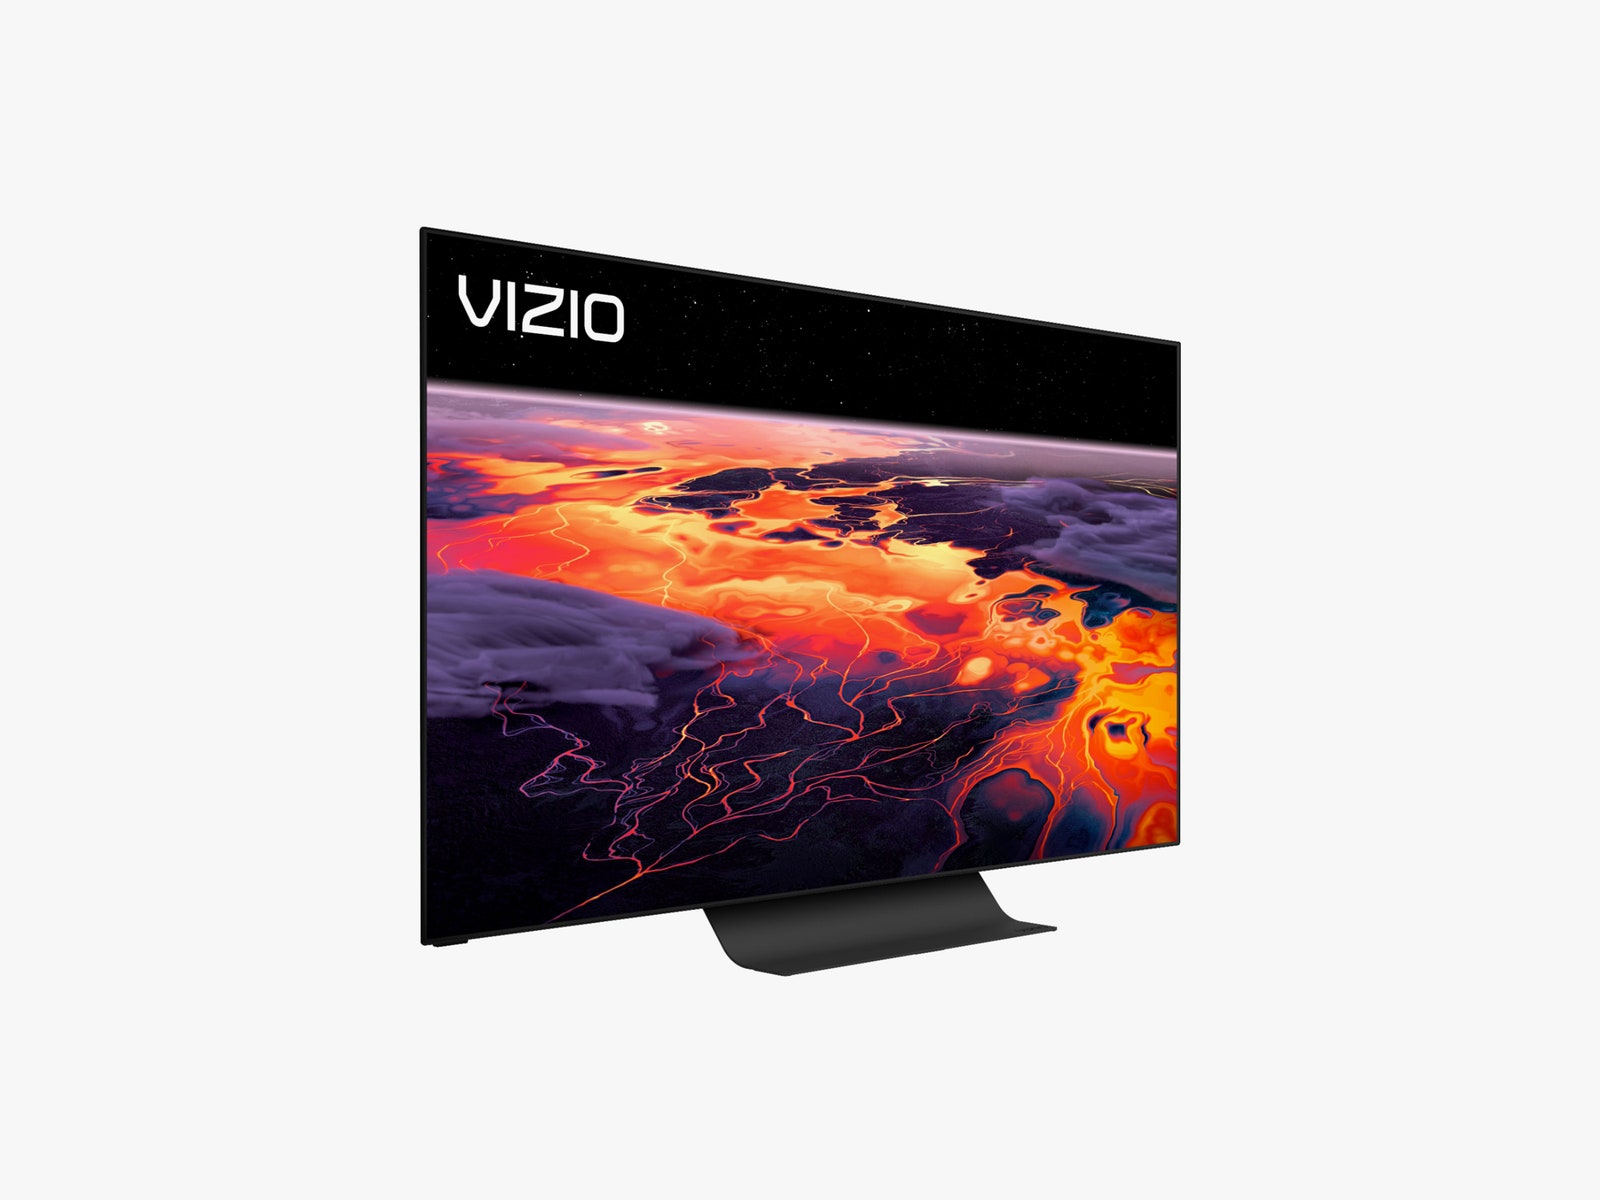 Vizio OLED 4K UHD (2020)|Features, Specs, Price - Daily Technic